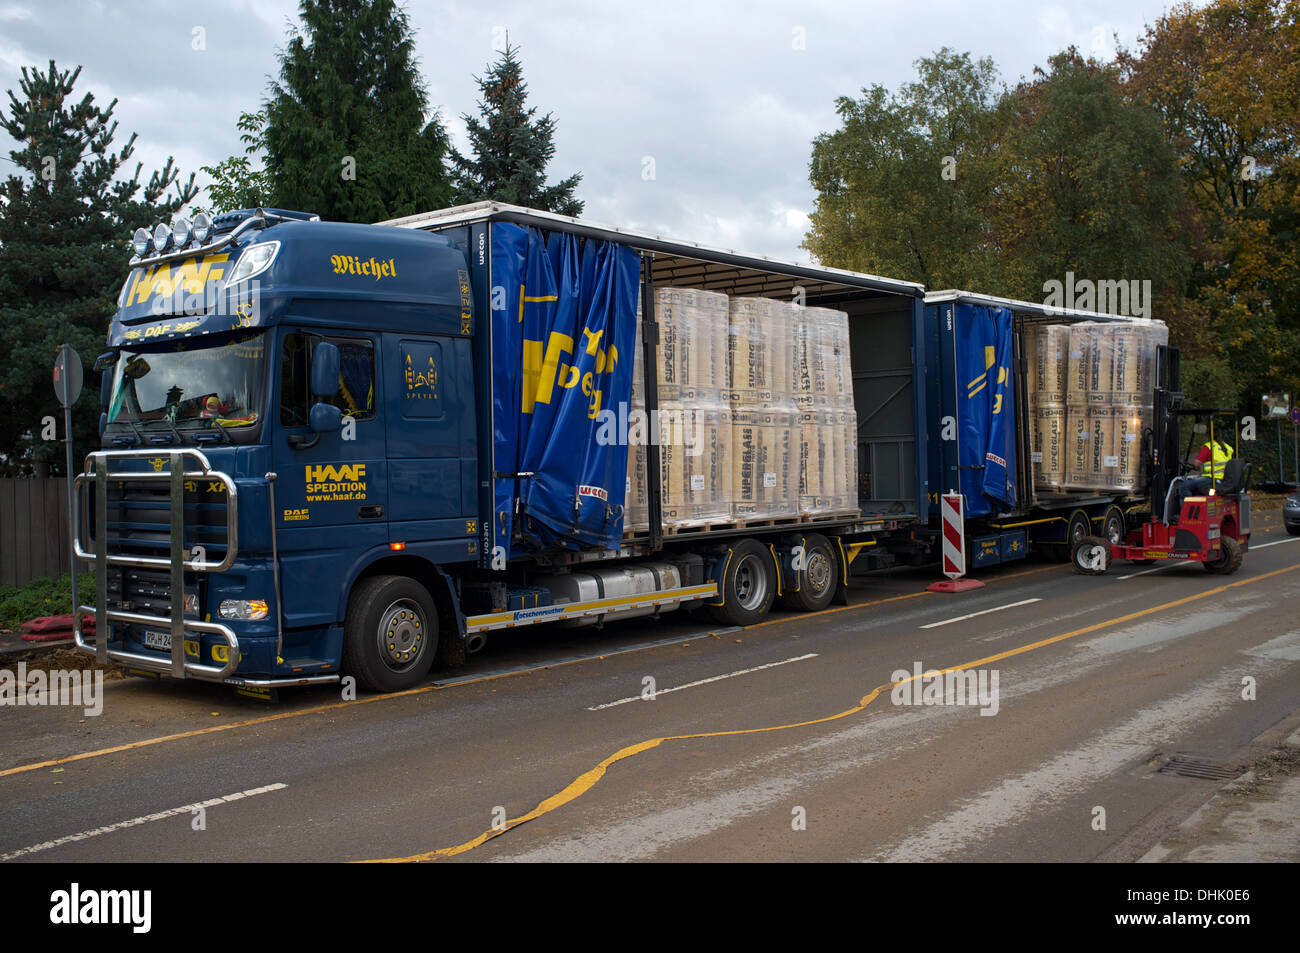 DAF 105.460 camion gestito da Haaf Sepdition Foto Stock